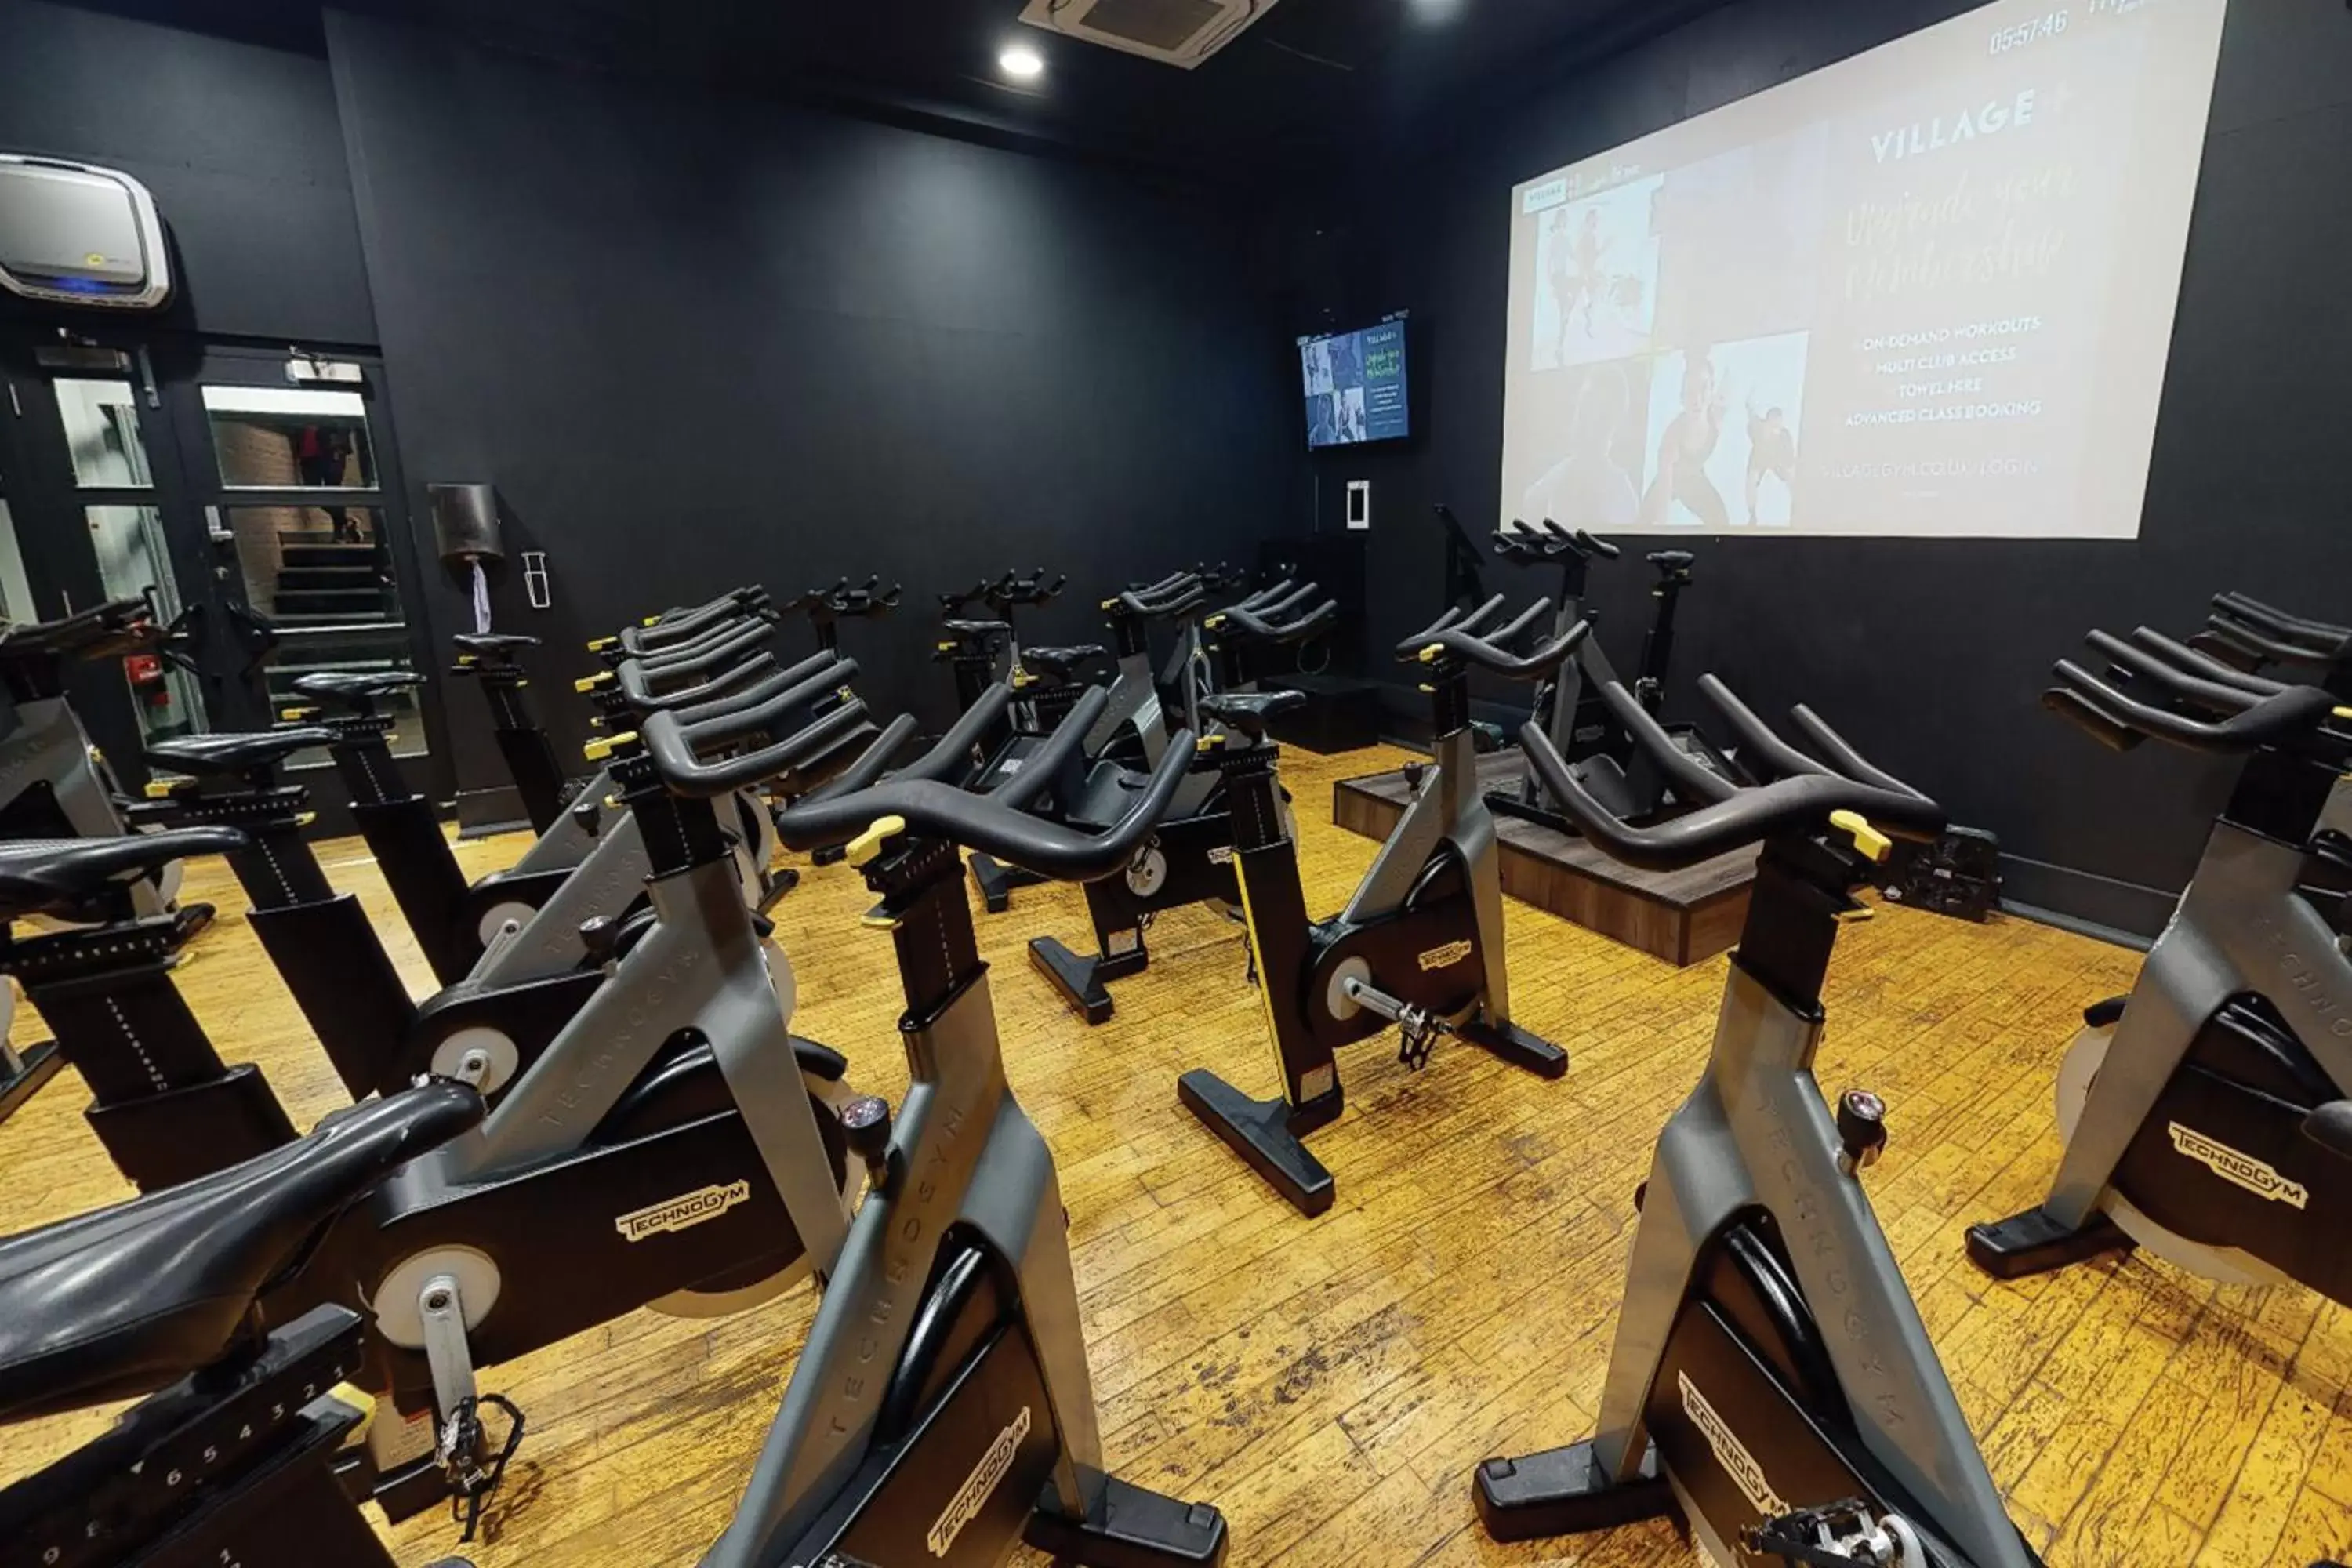 Fitness centre/facilities, Fitness Center/Facilities in Village Hotel Warrington